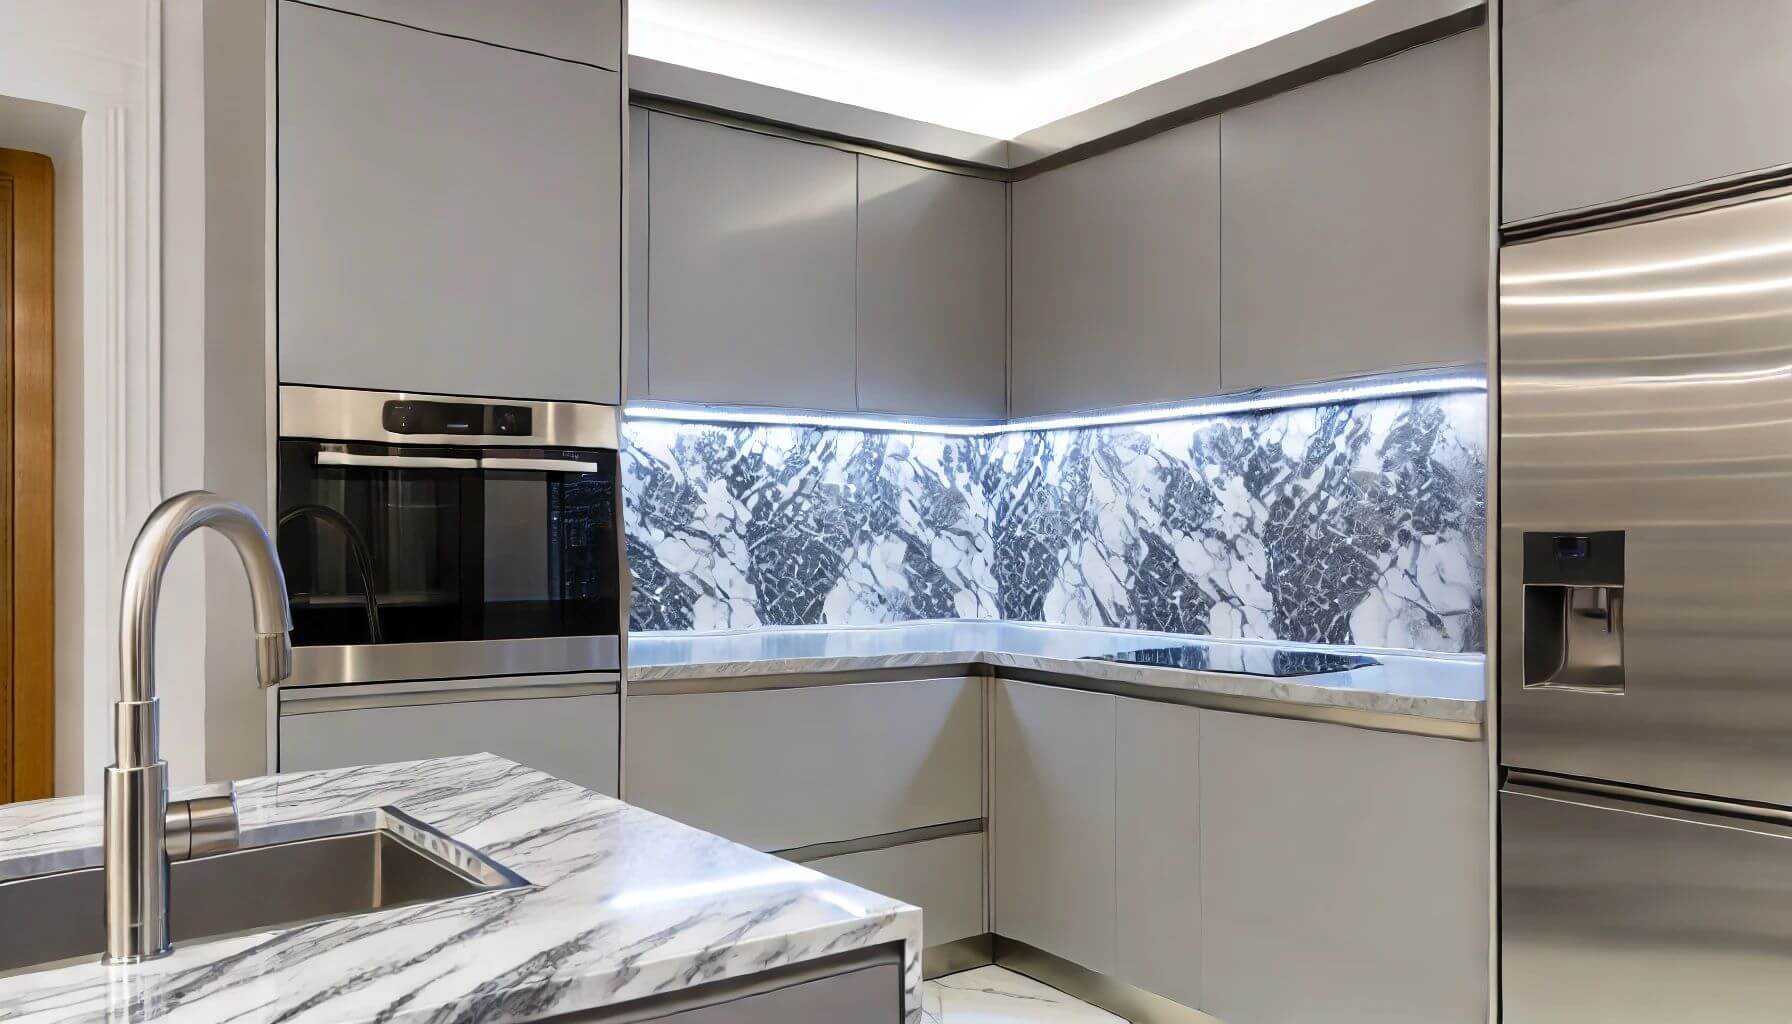 How to enhance your kitchen with elegant marble backsplash